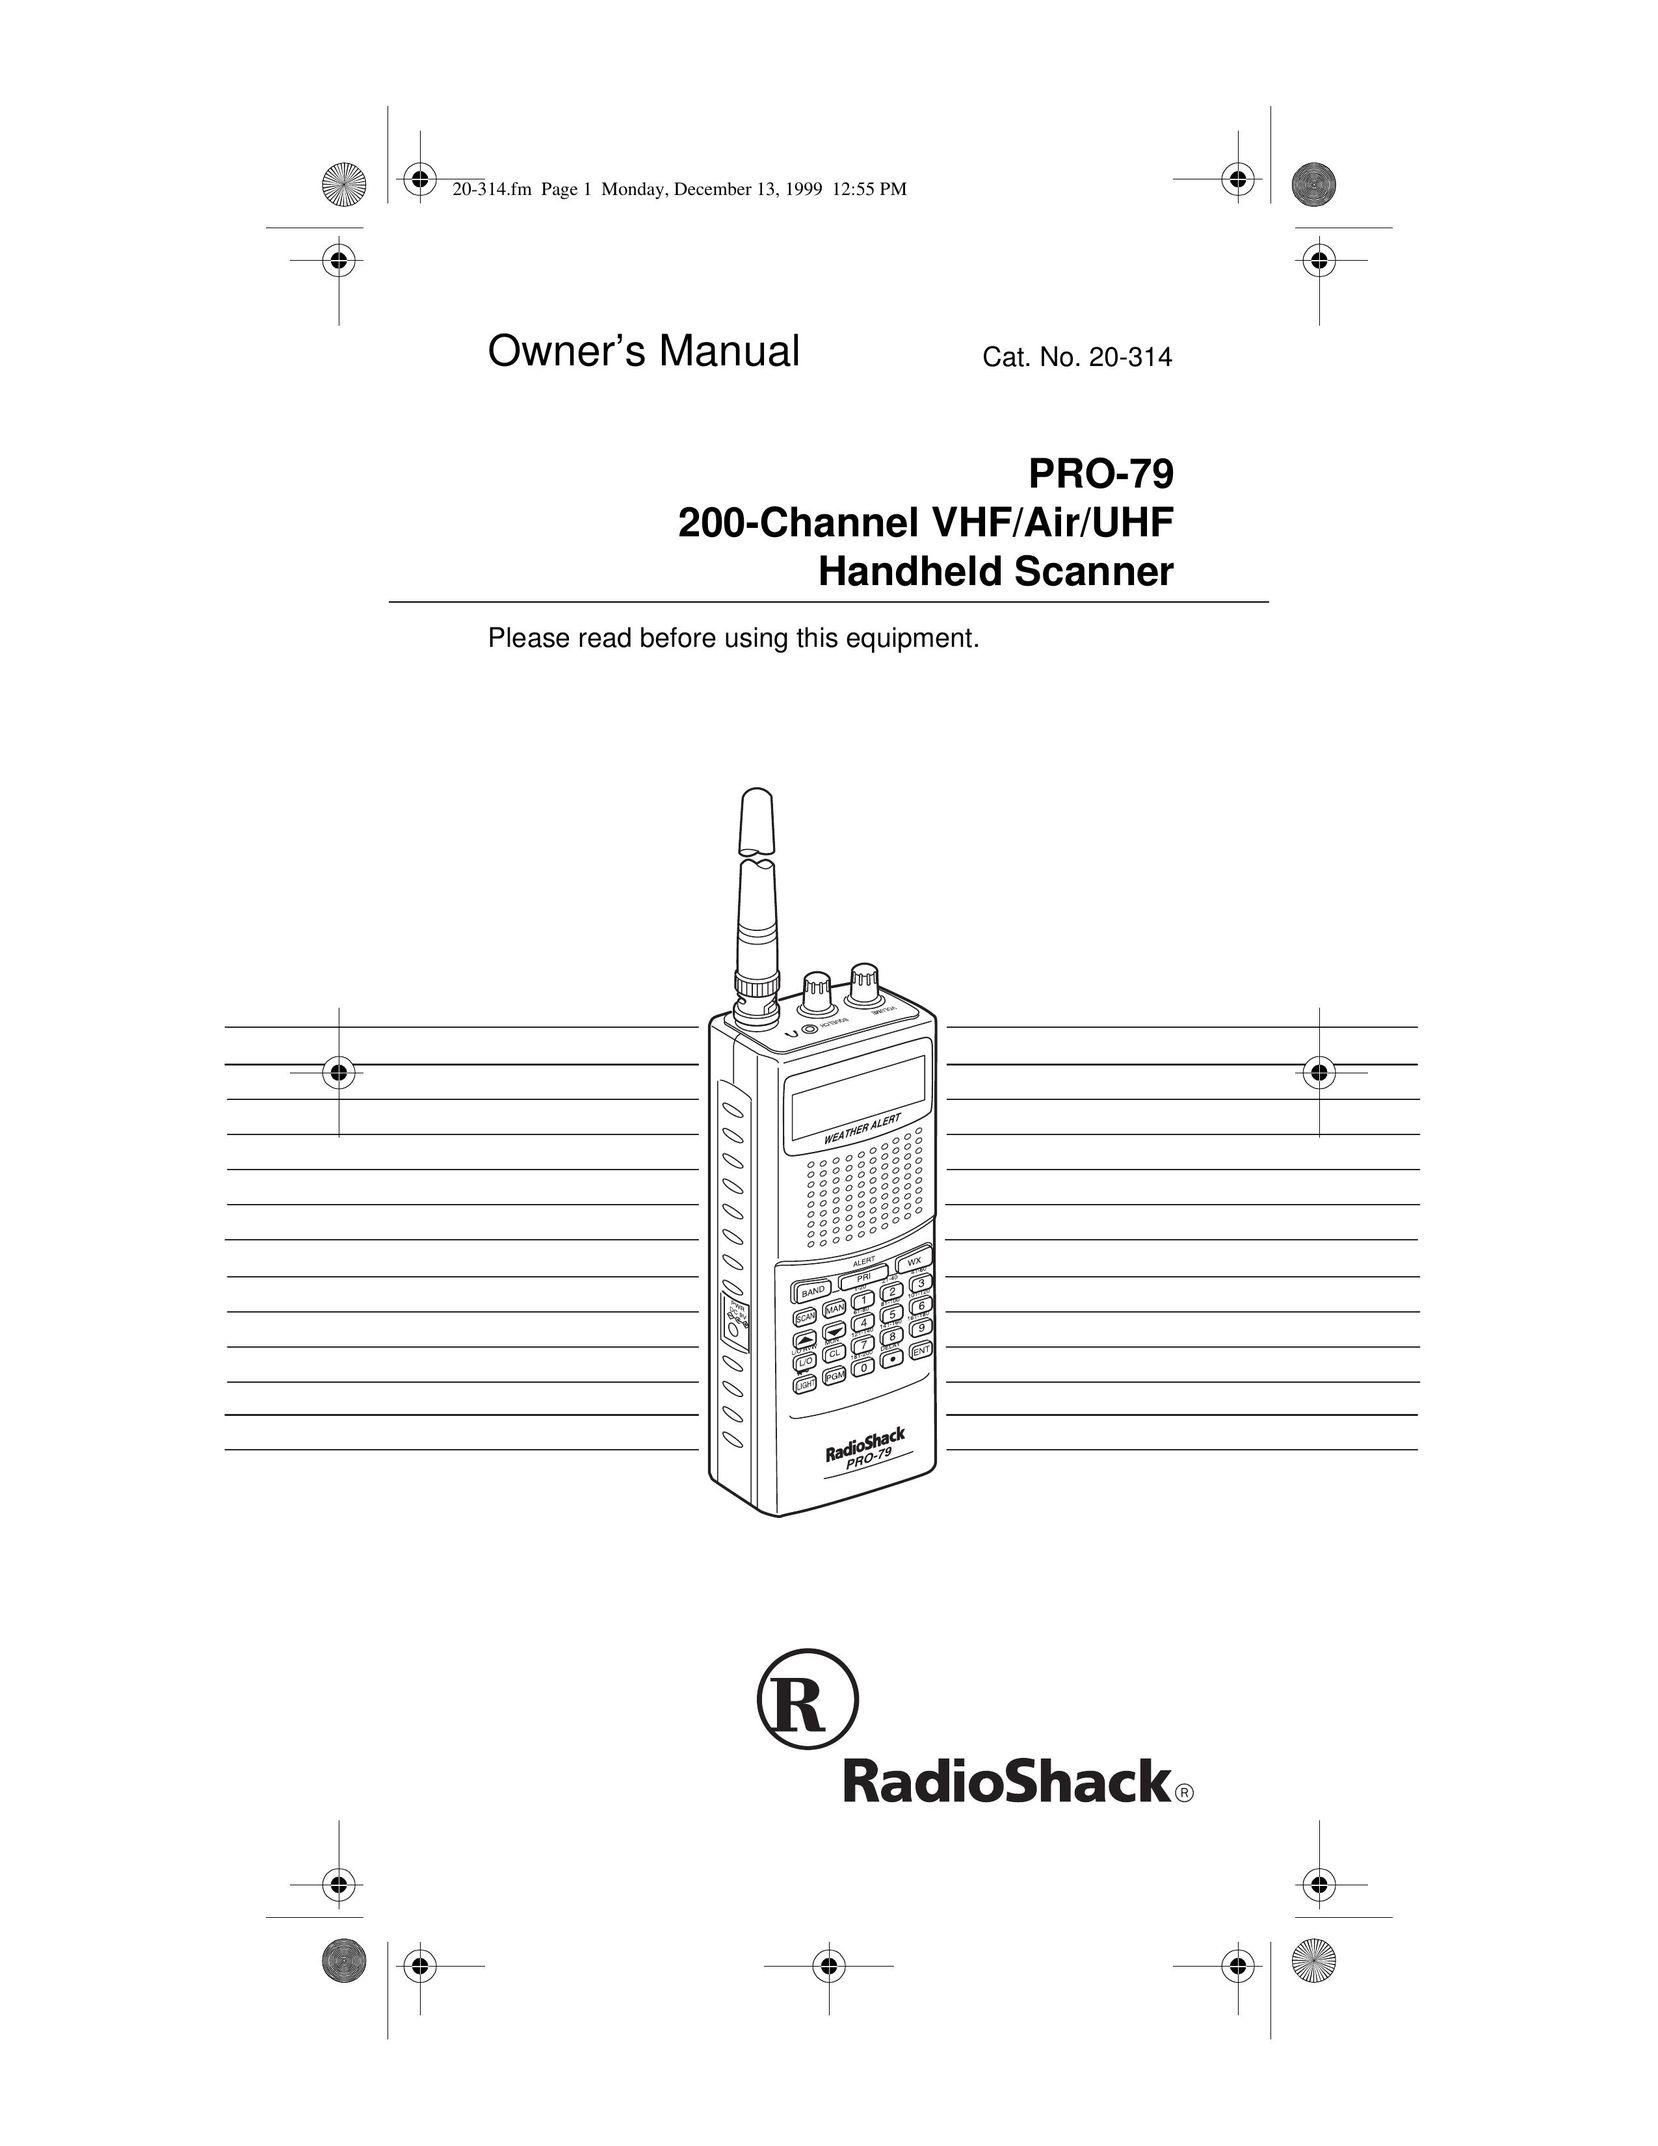 Radio Shack PRO-79 Scanner User Manual